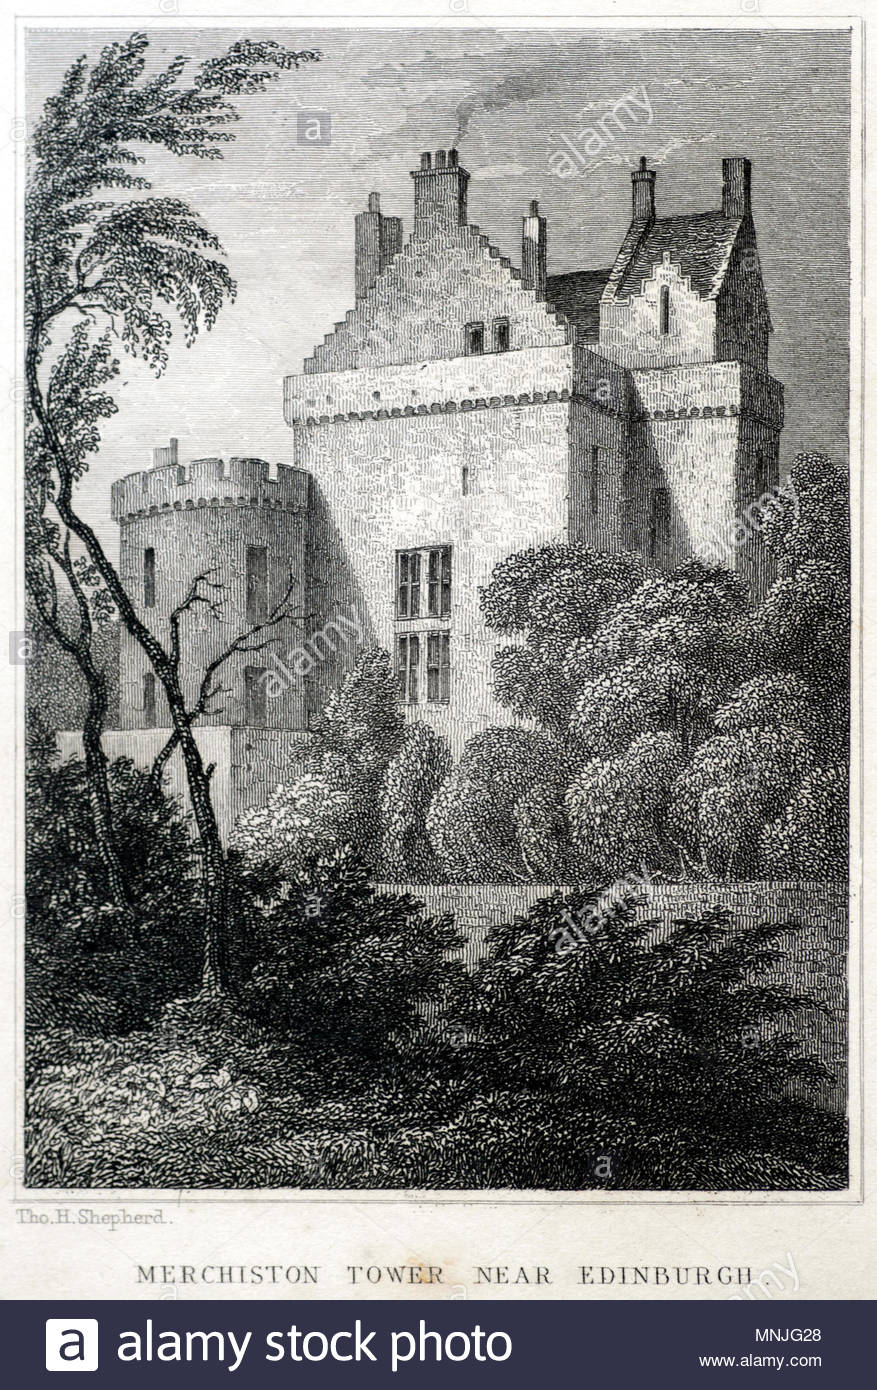 Merchiston Tower, Edinburgh, antique engraving from 1829 Stock Photo